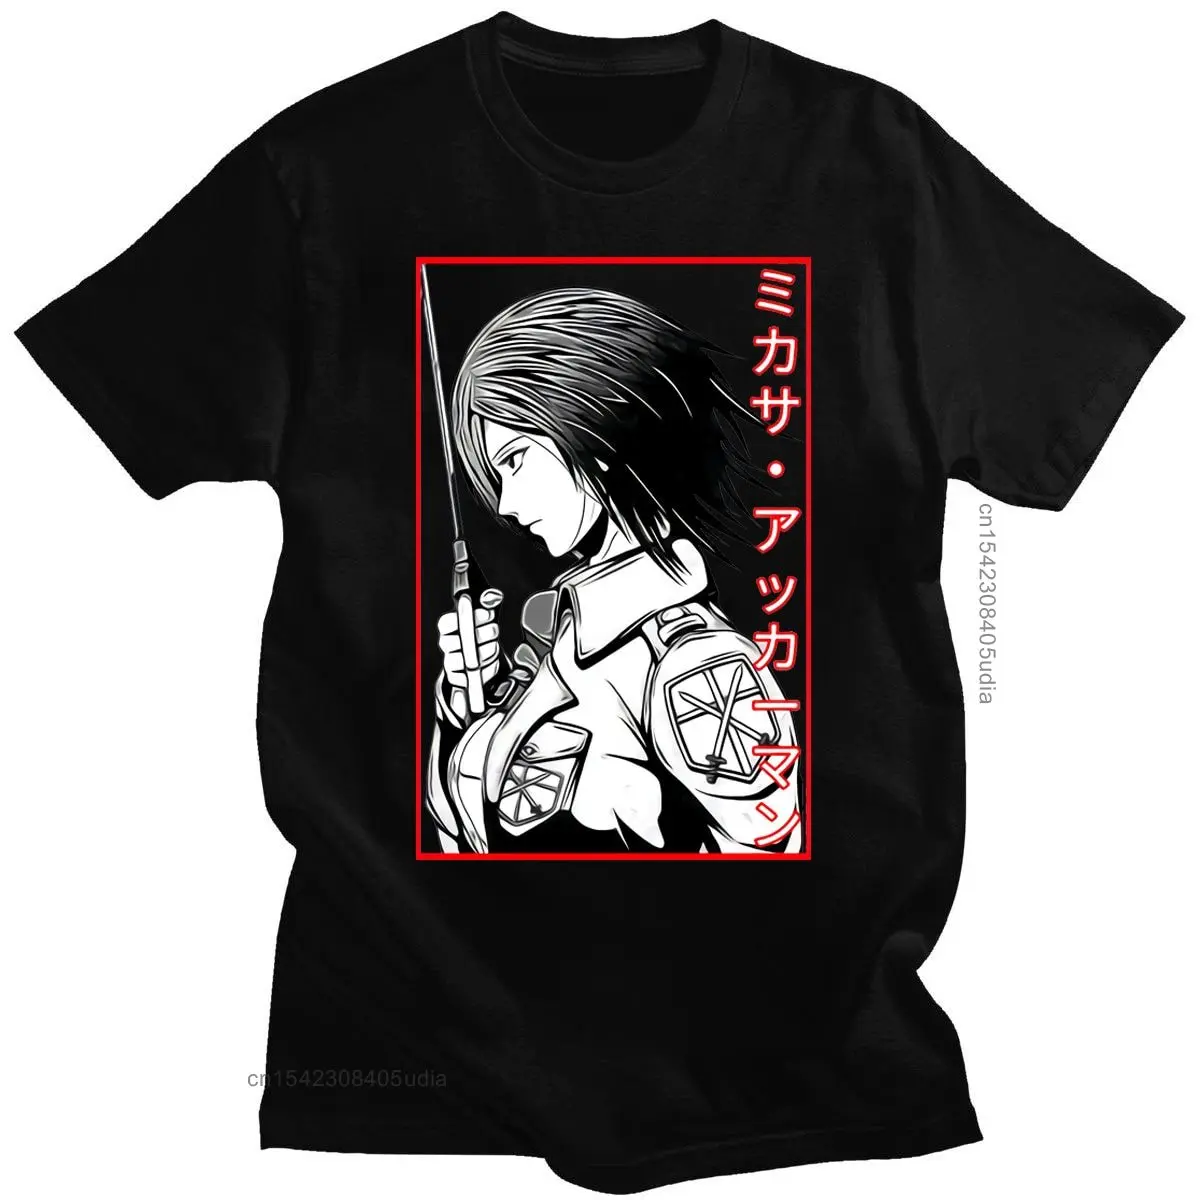 Popular Japanese Anime Attack On Titan Print T Shirt Male Women Fashion Retro Manga T-Shirt Short Sleeve Clothing Shirt